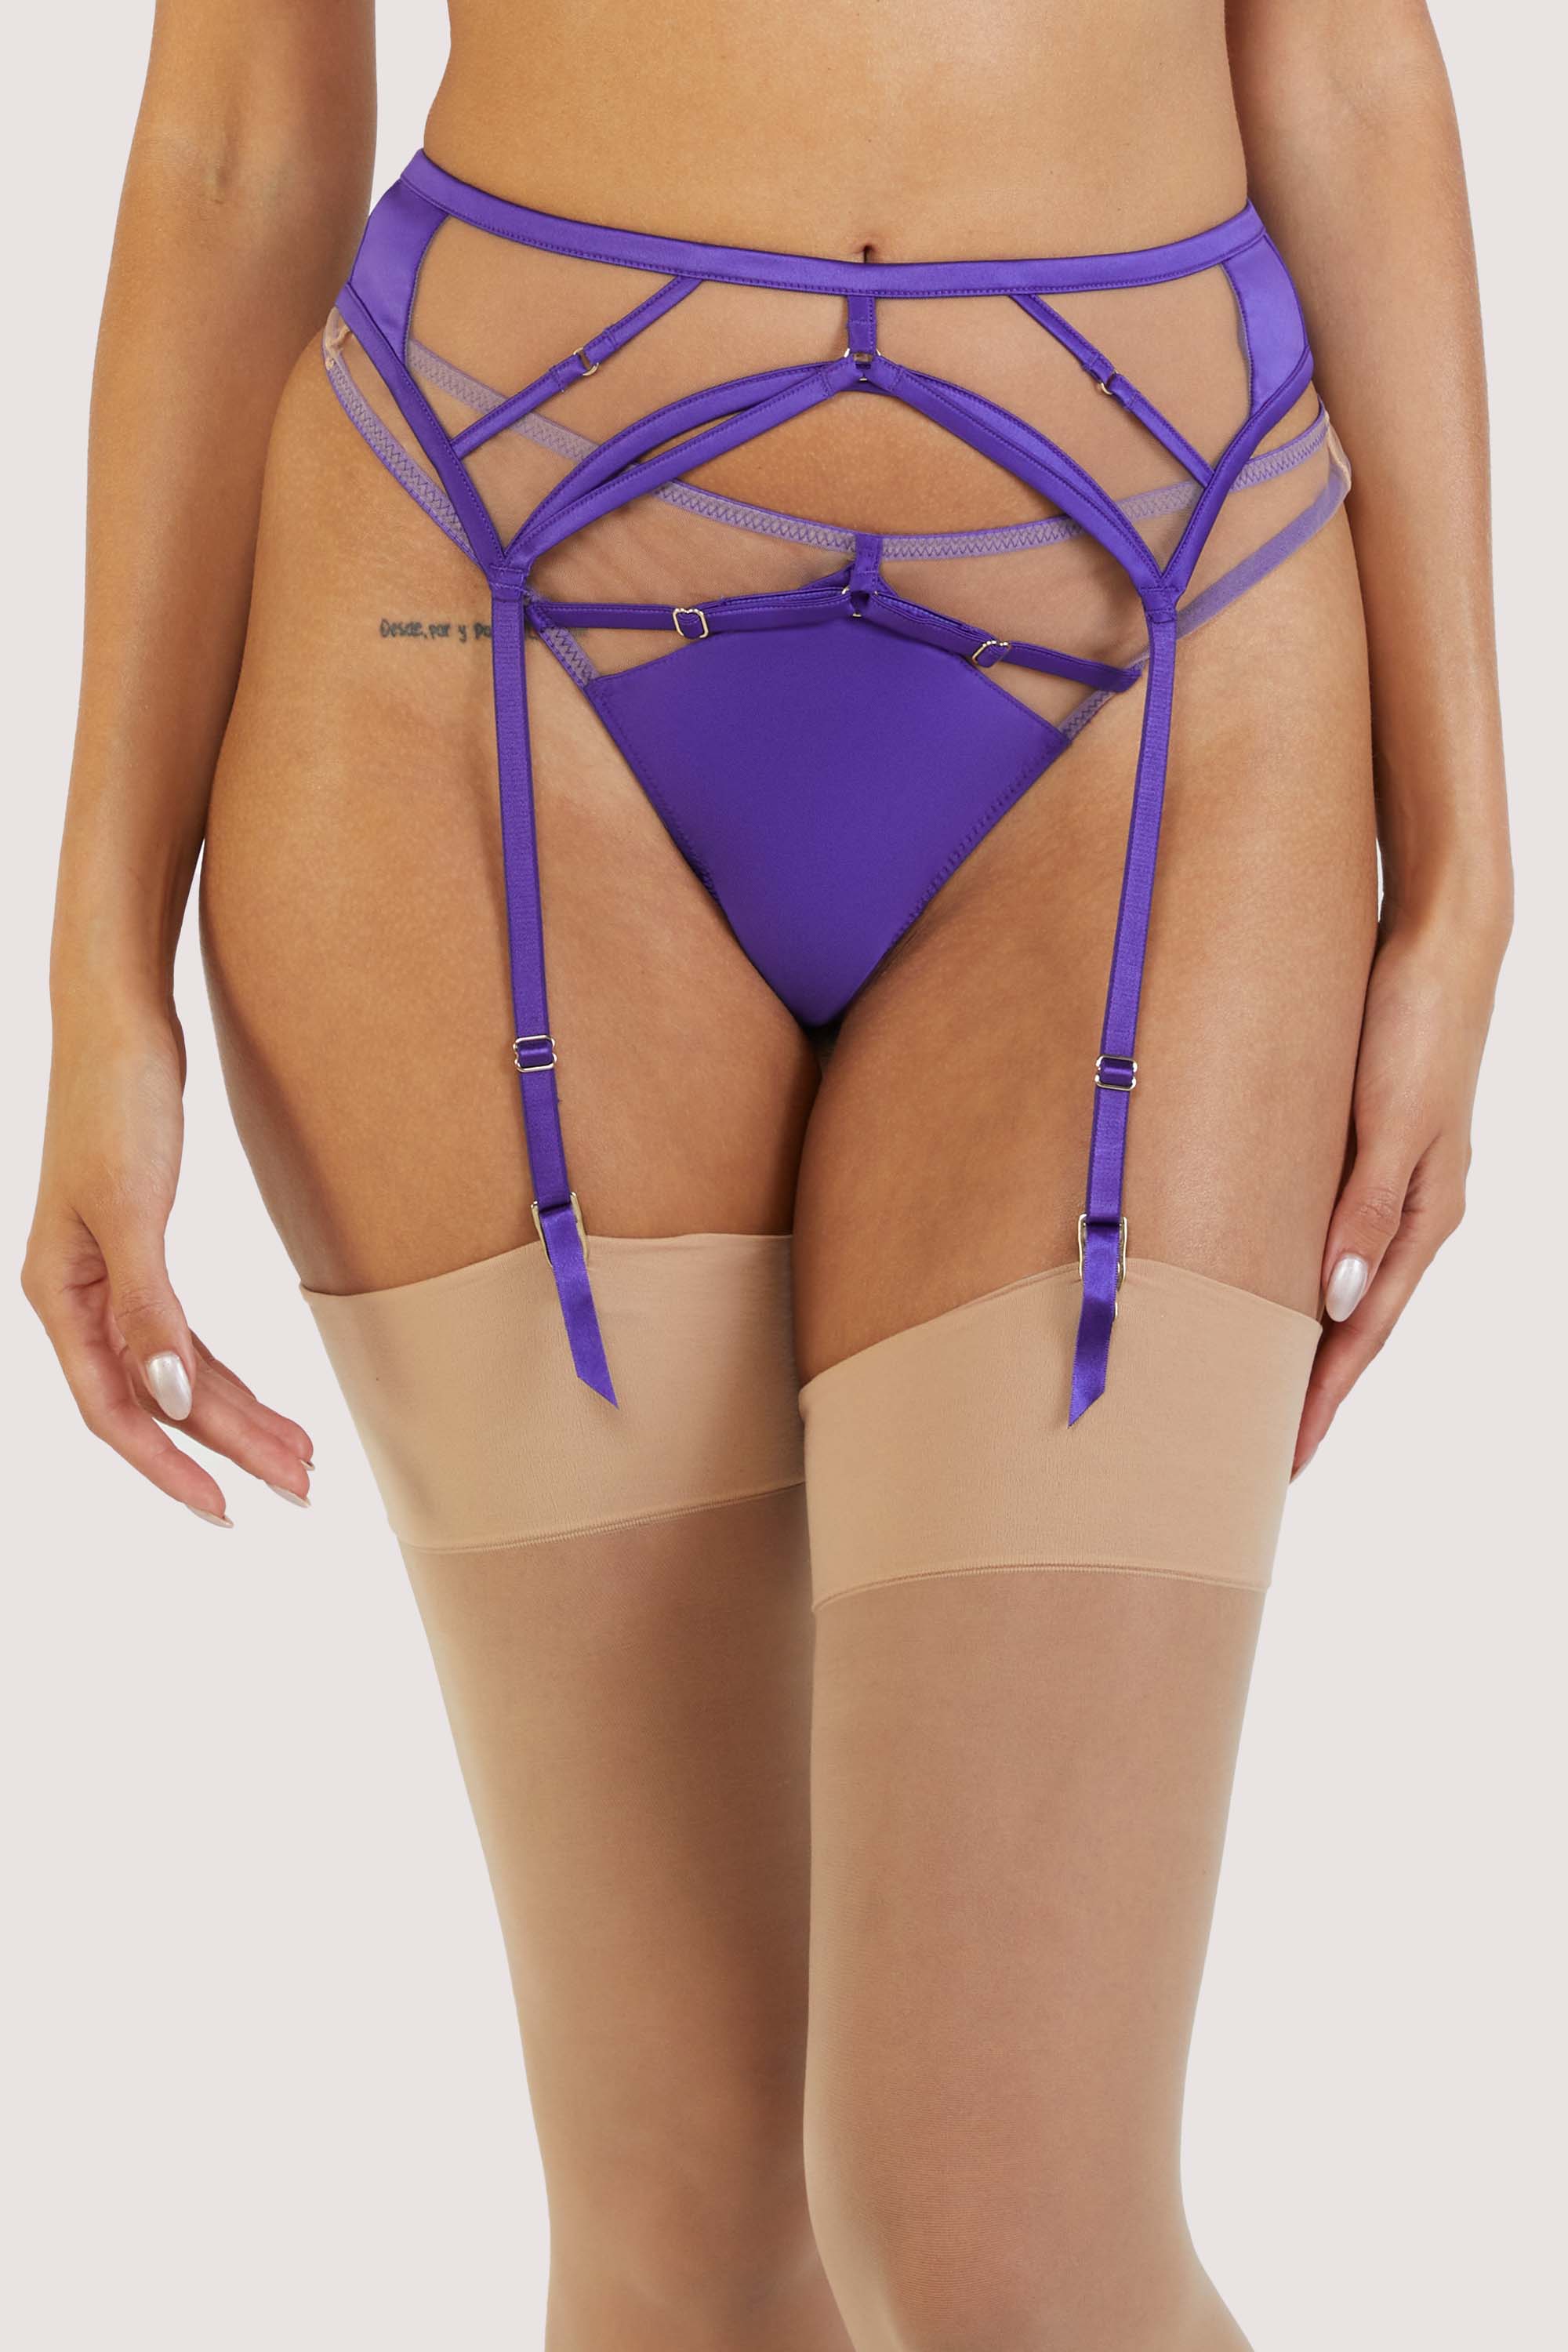 Ramona Purple Strap Detail Illusion Mesh Suspender 8